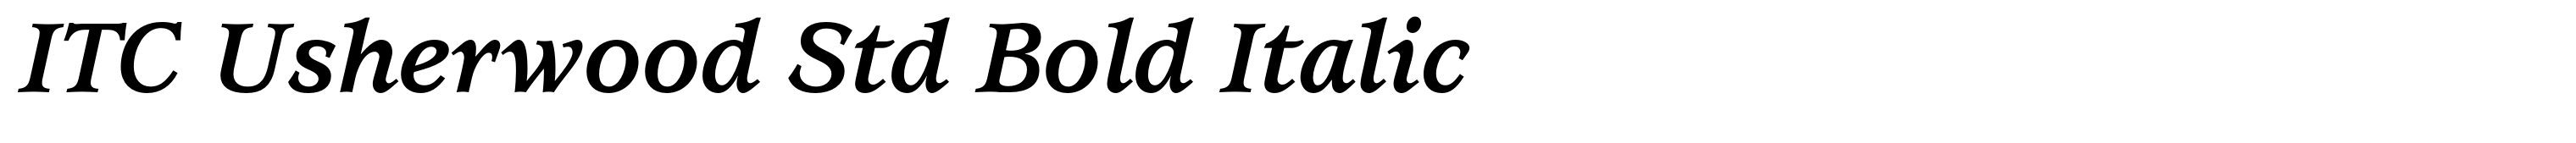 ITC Usherwood Std Bold Italic